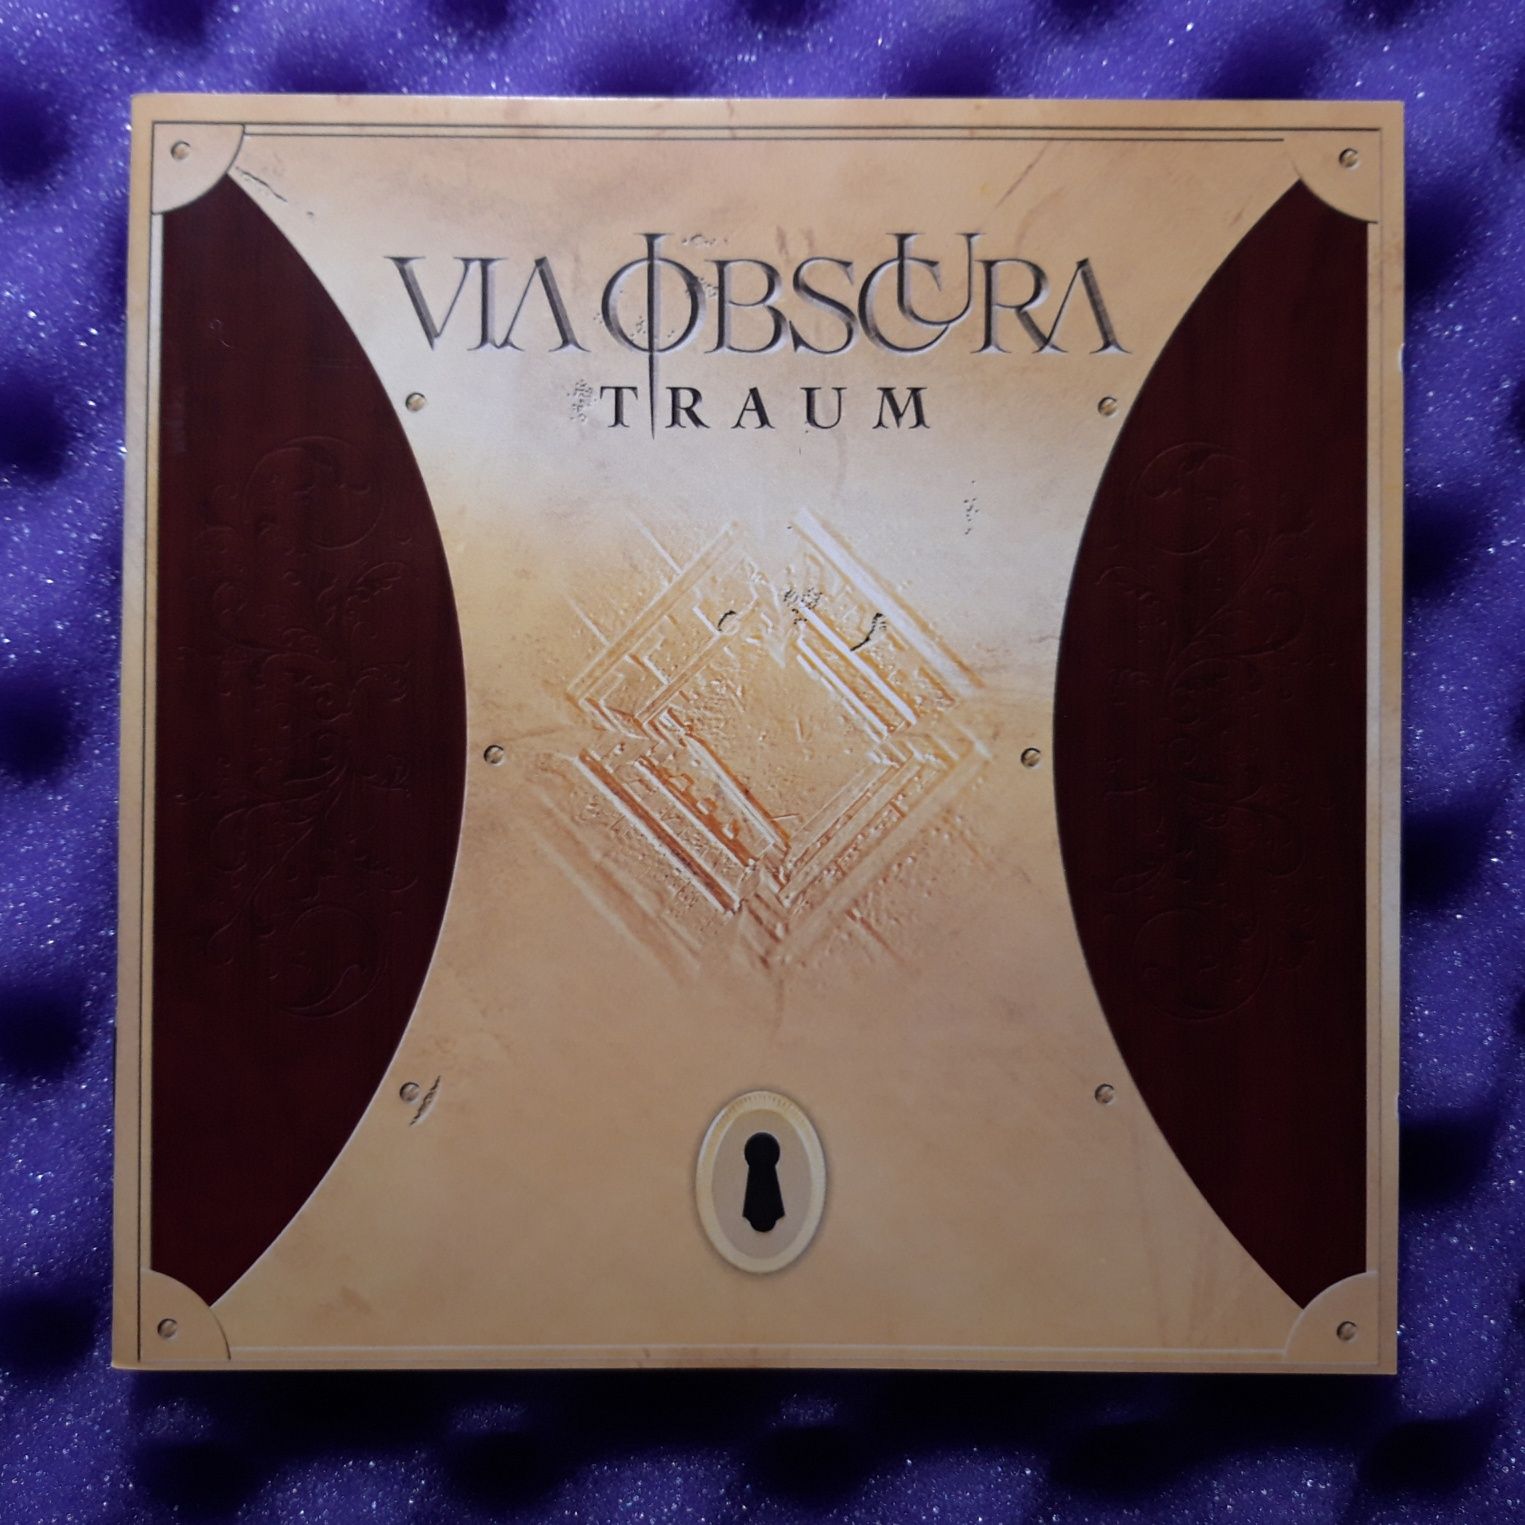 Via Obscura – Traum (CD, 2009)